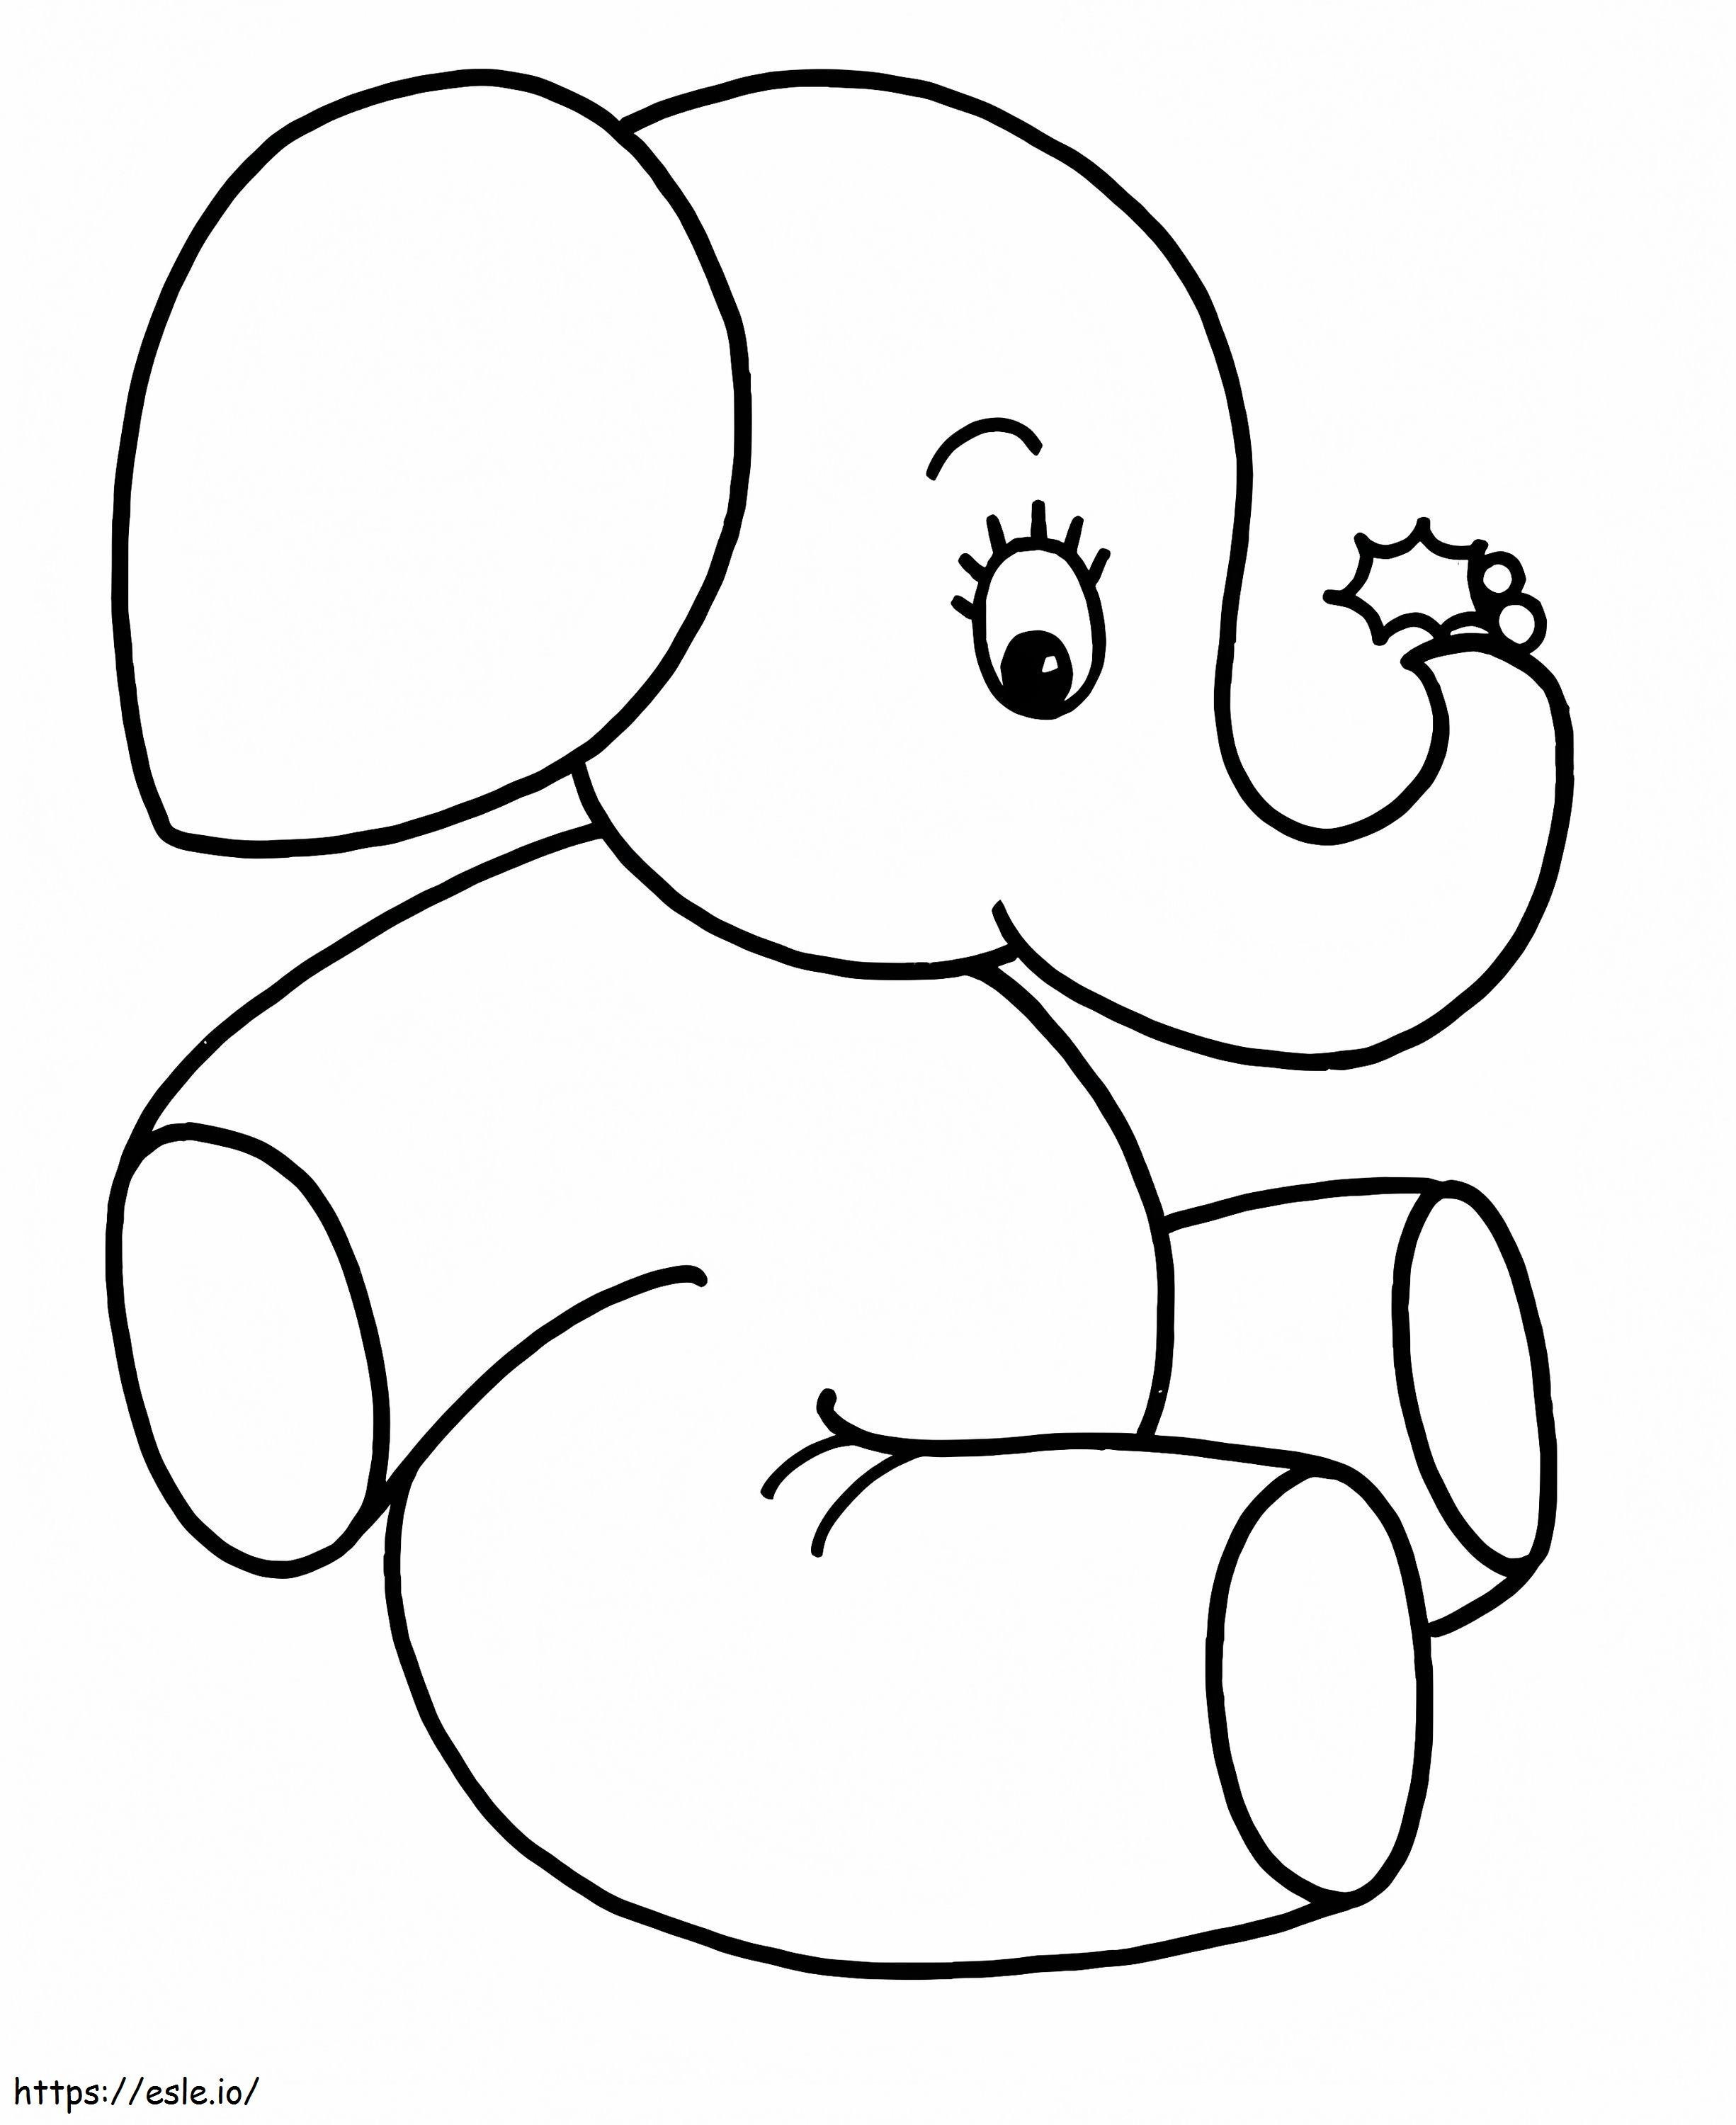 Elefante sentado fácil para colorir